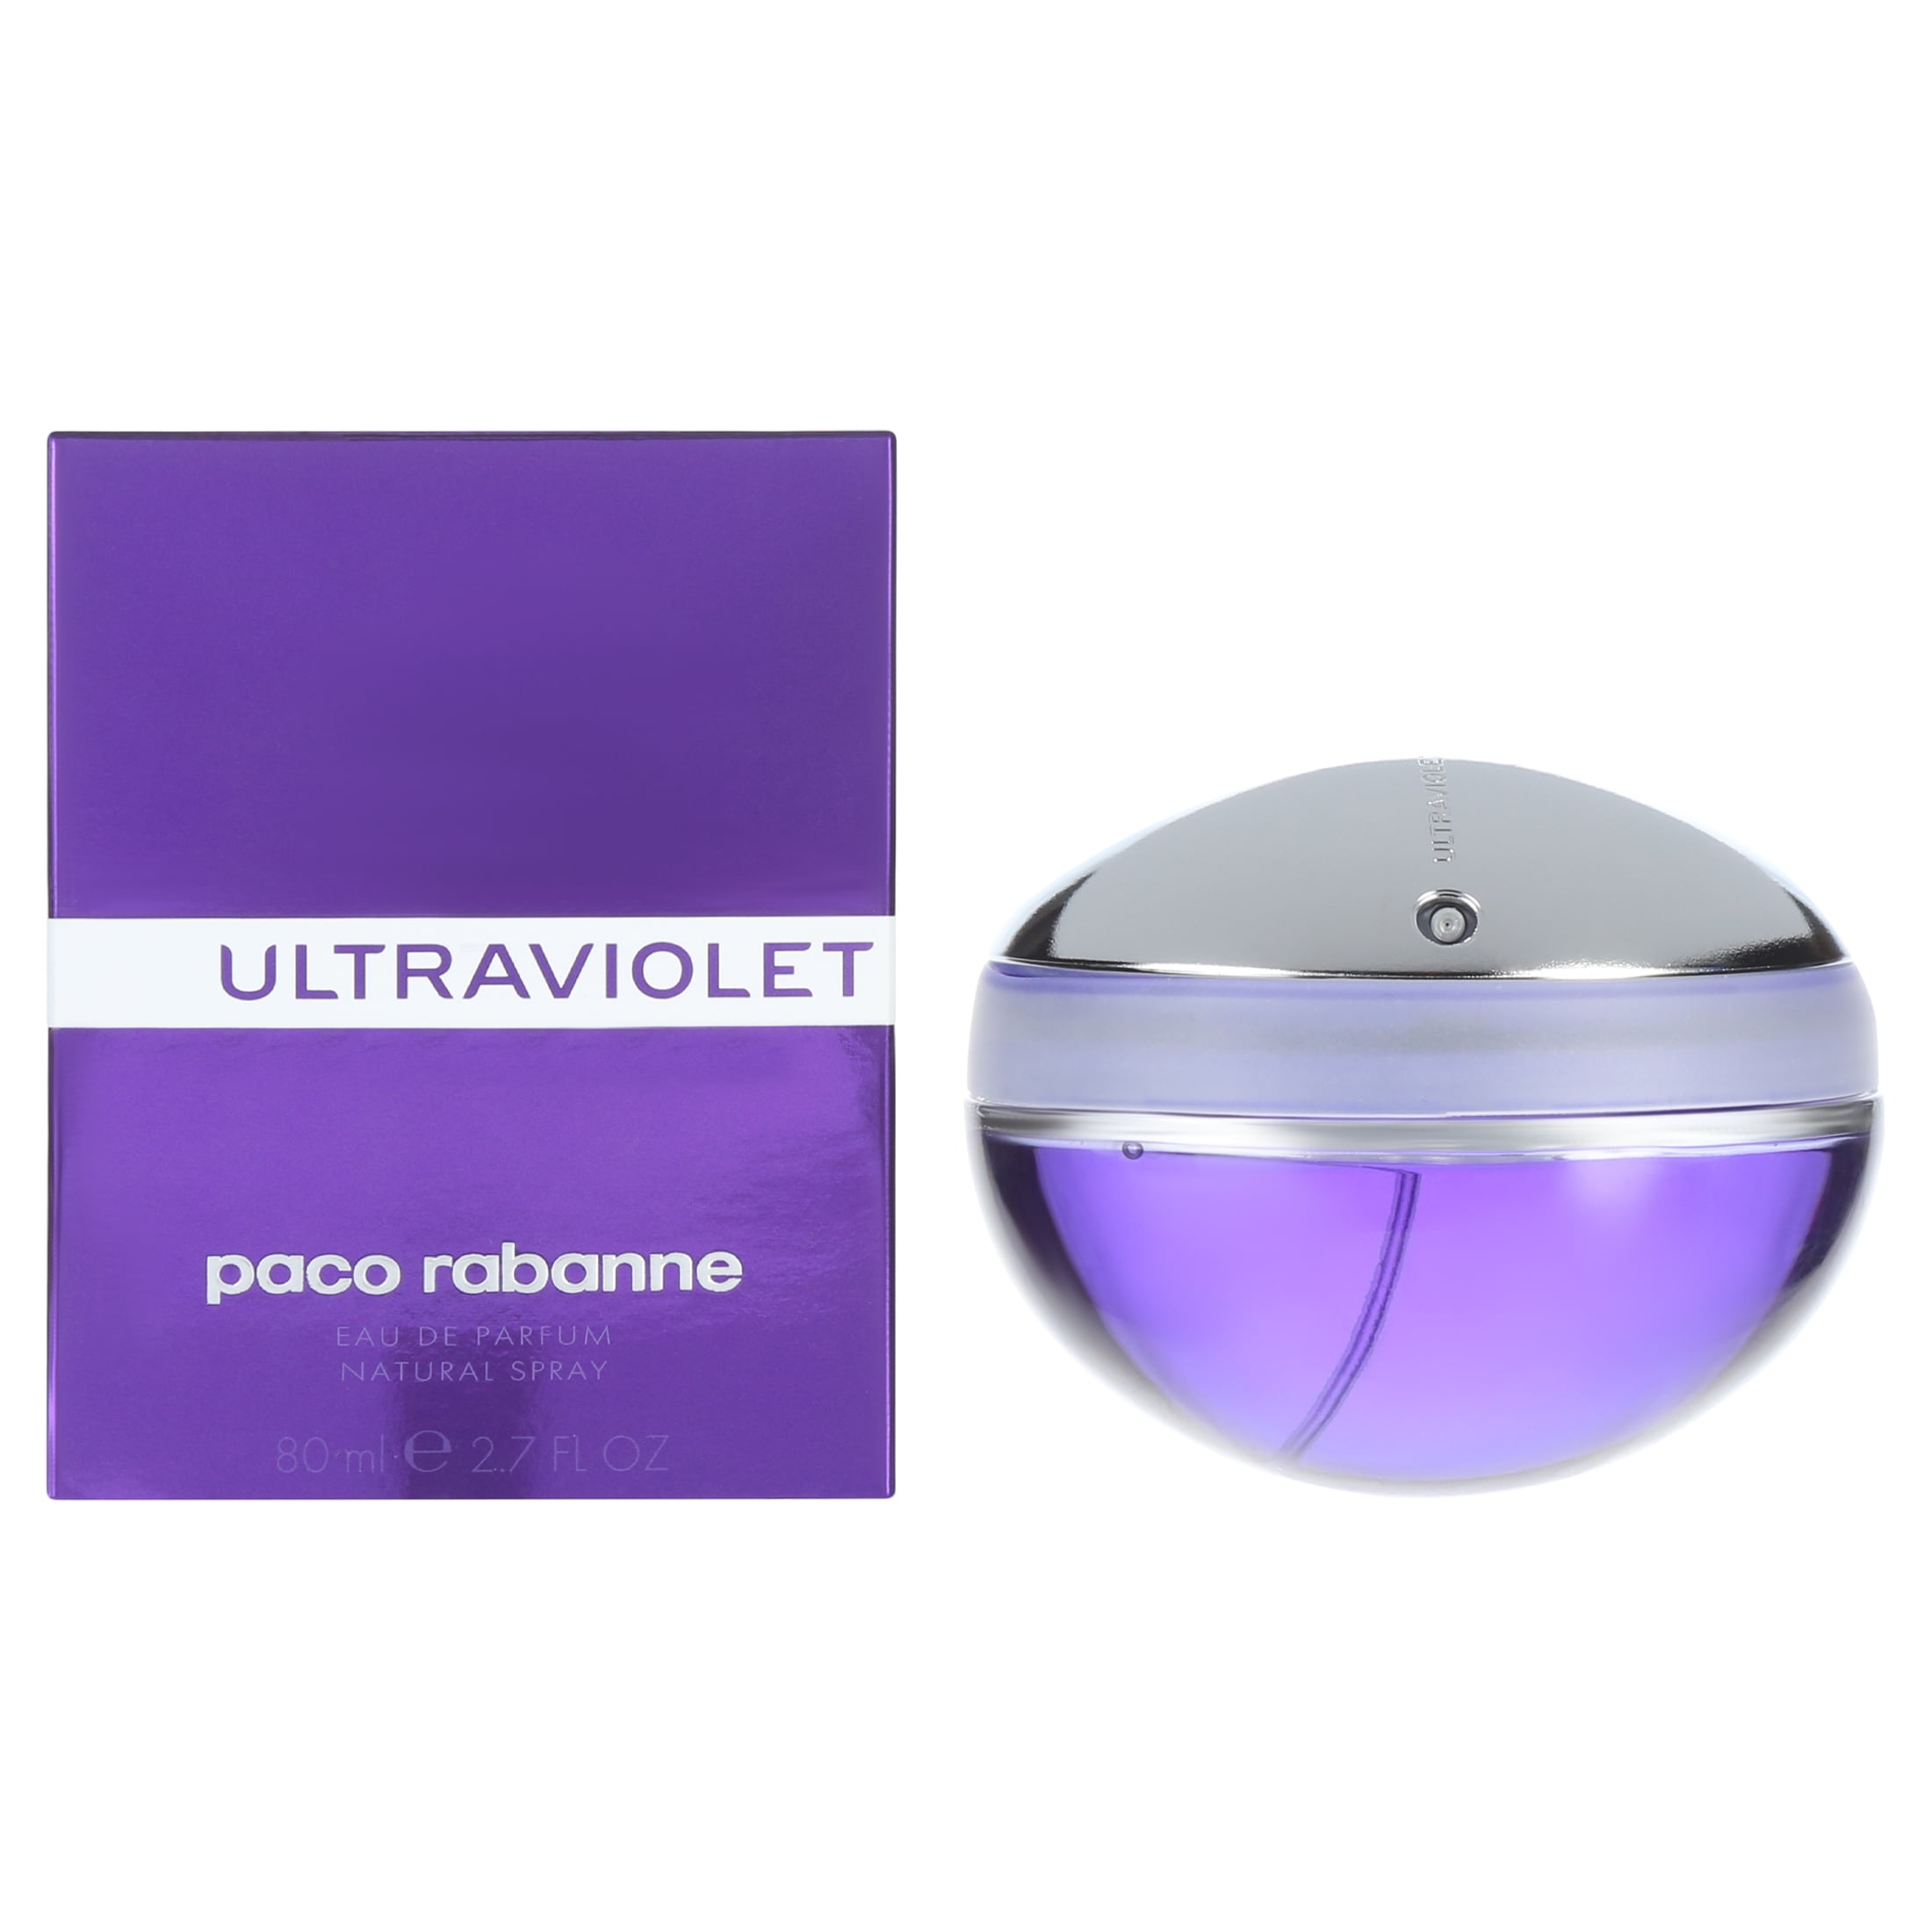 Havslug mens Kortfattet Ultraviolet by Paco Rabanne EDP Spray 2.7 oz - Walmart.com